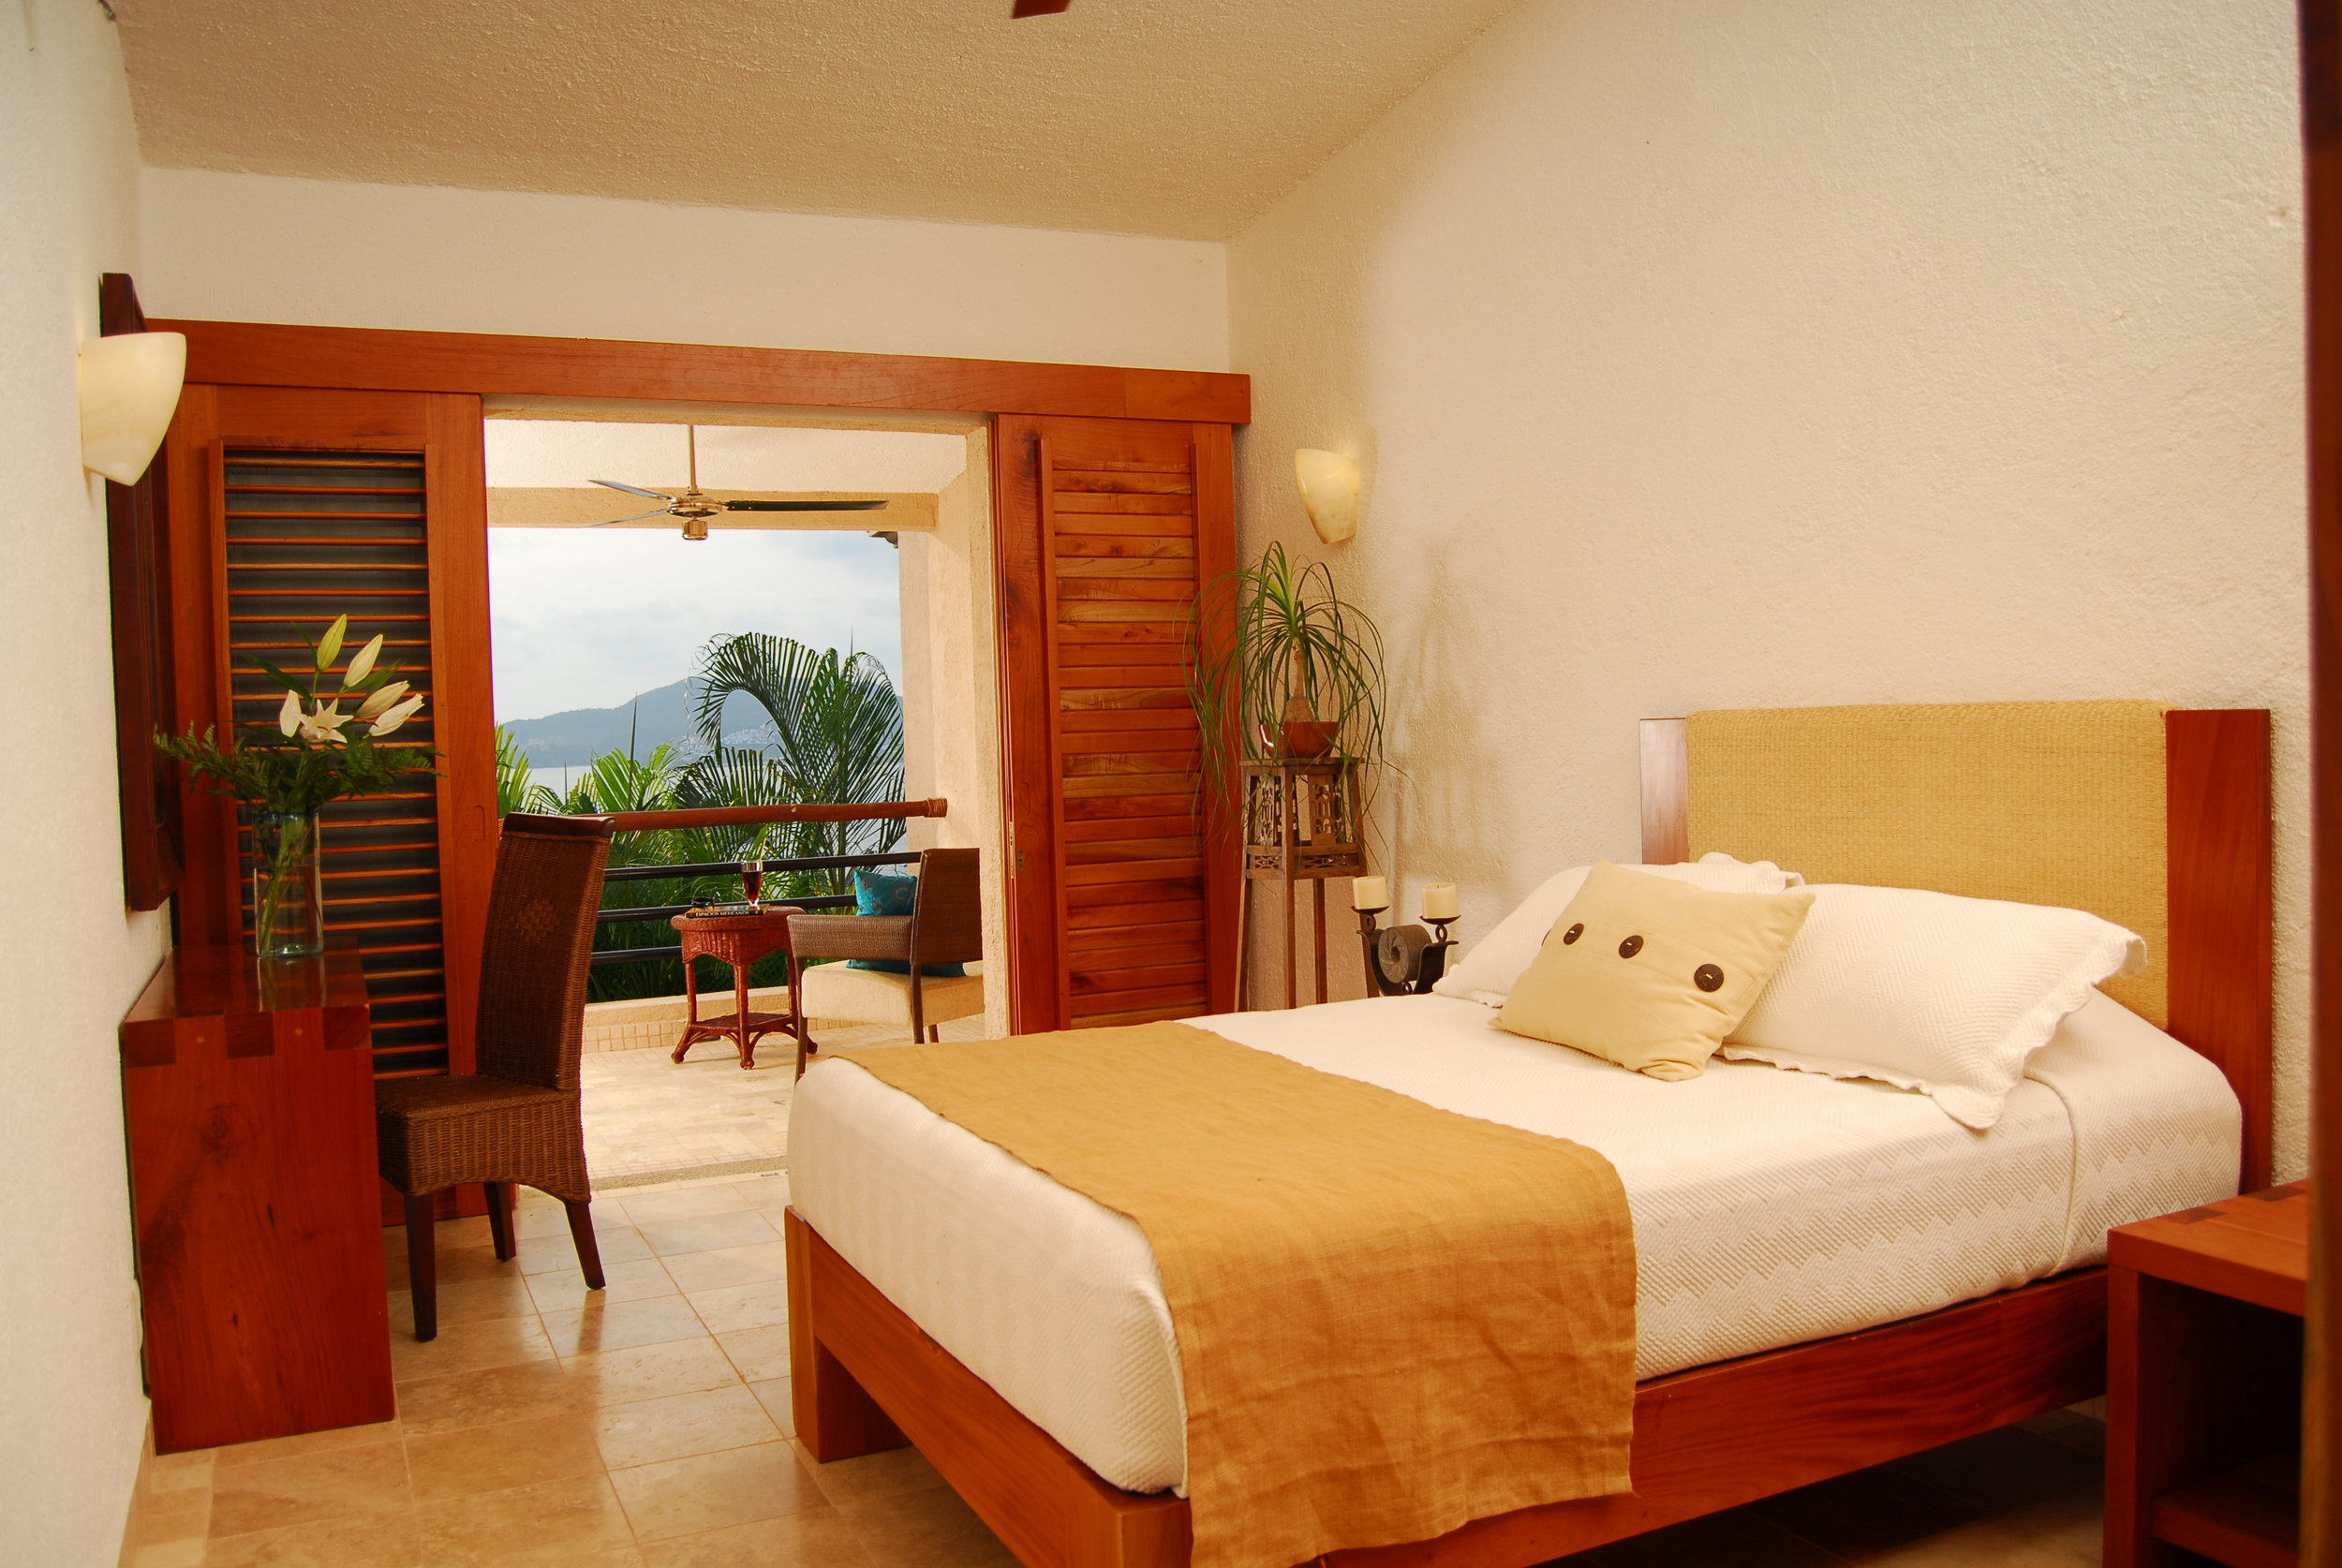 naivi-casa-4-ixtapa-zihuatanejo-mexico-for-sale-tara-medina-real-estate-bedroom-with-view.jpg